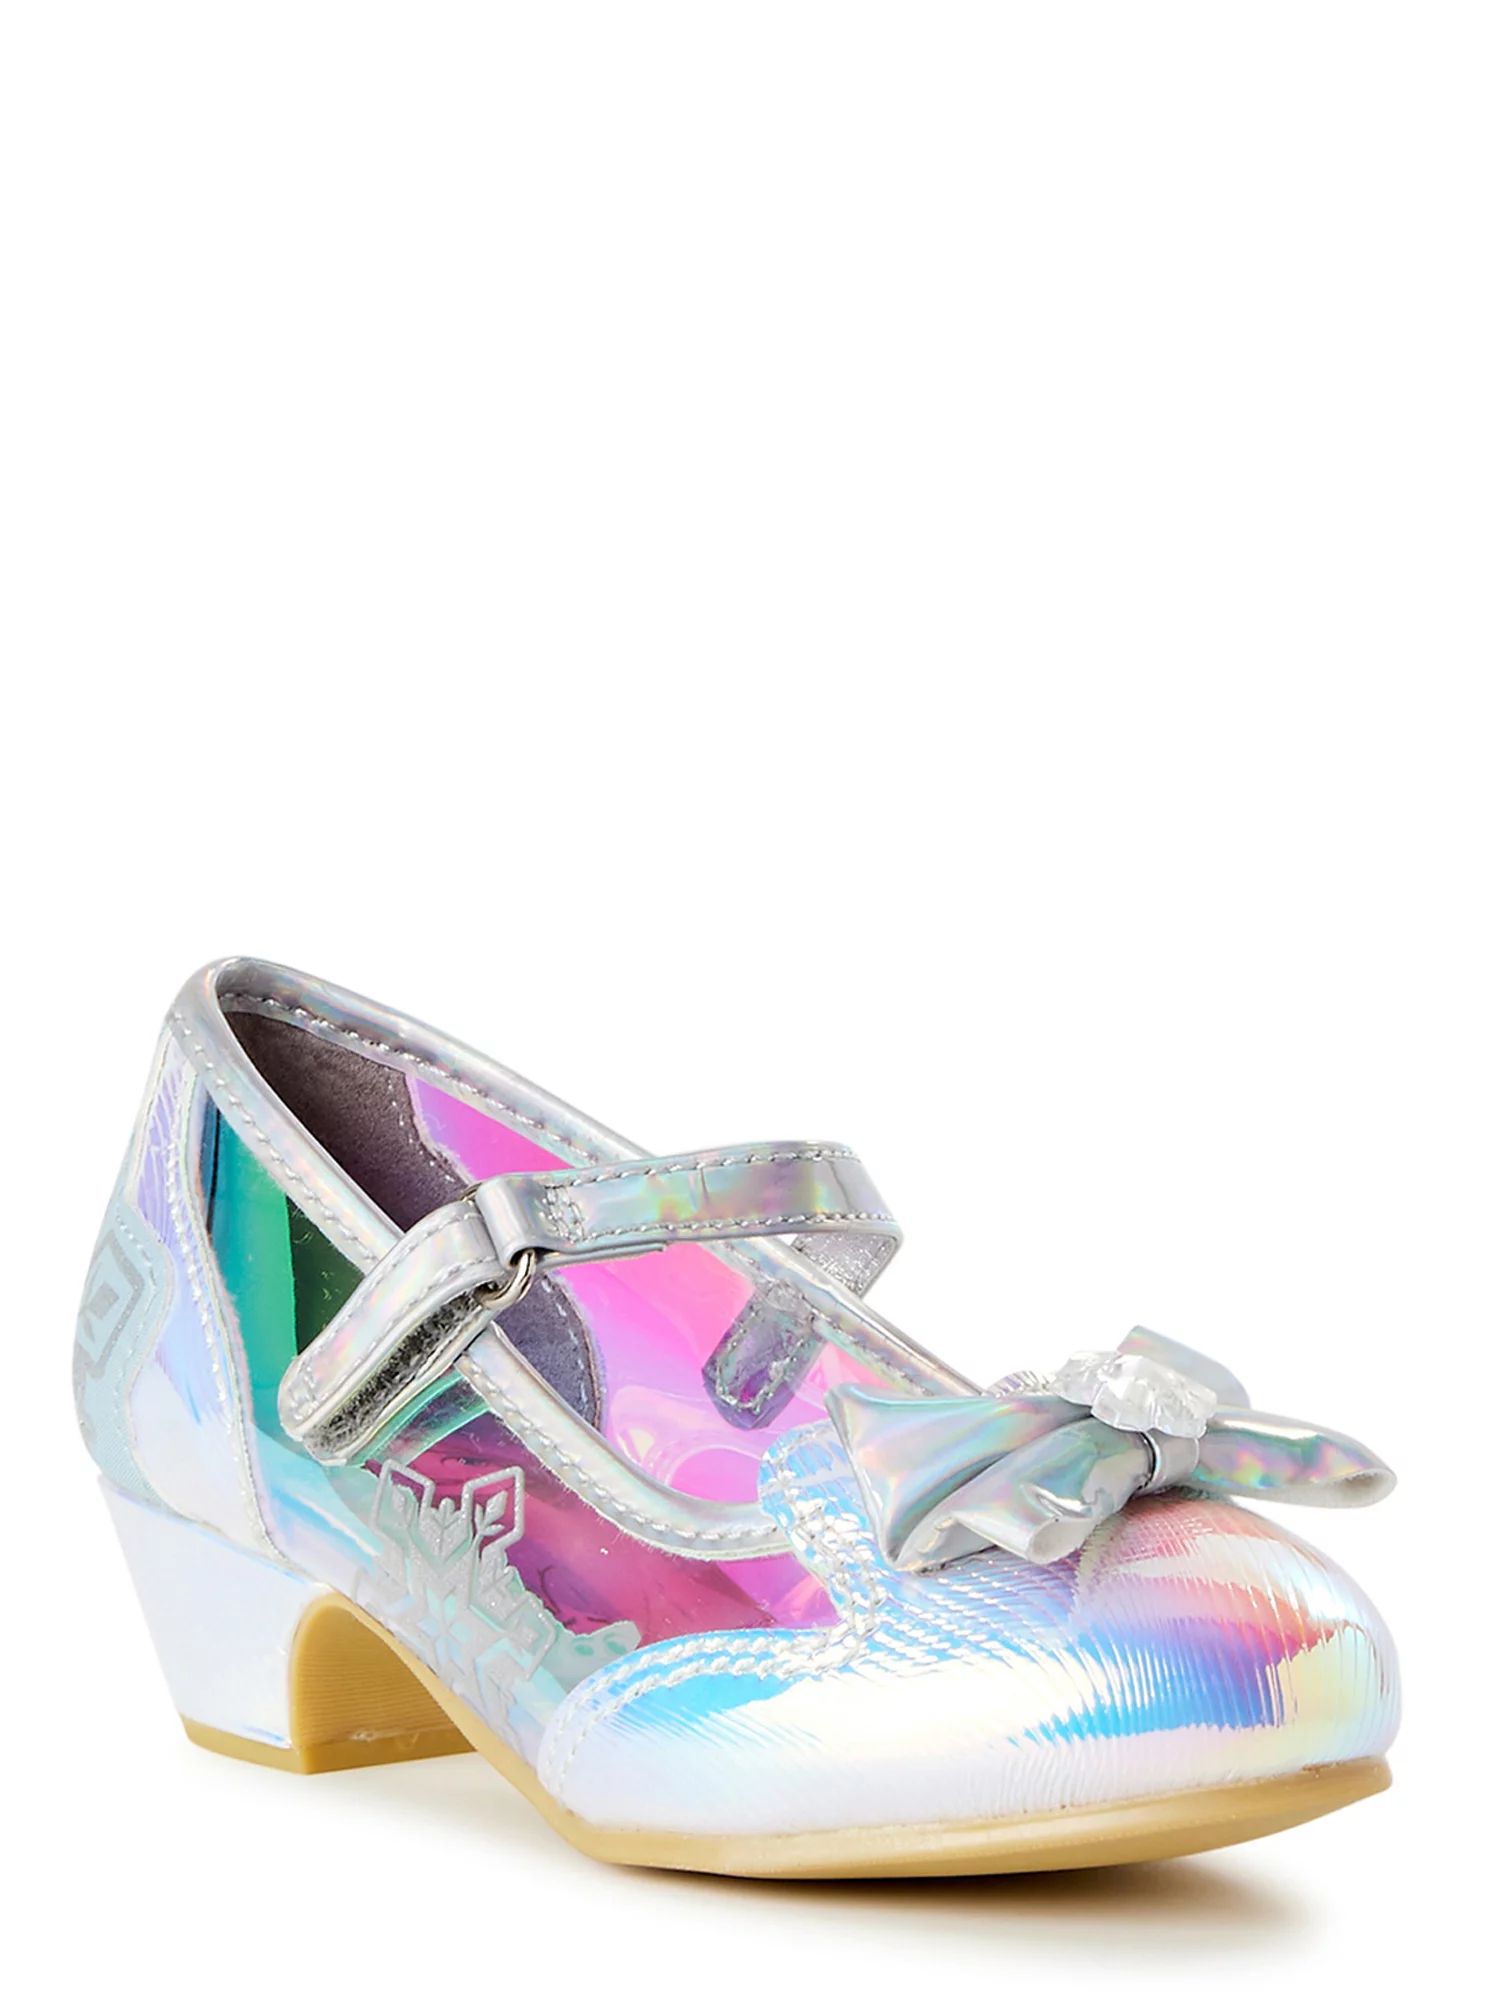 Disney Frozen Toddler Girl Low Heel Dress Up Shoes, Sizes 7-12 | Walmart (US)